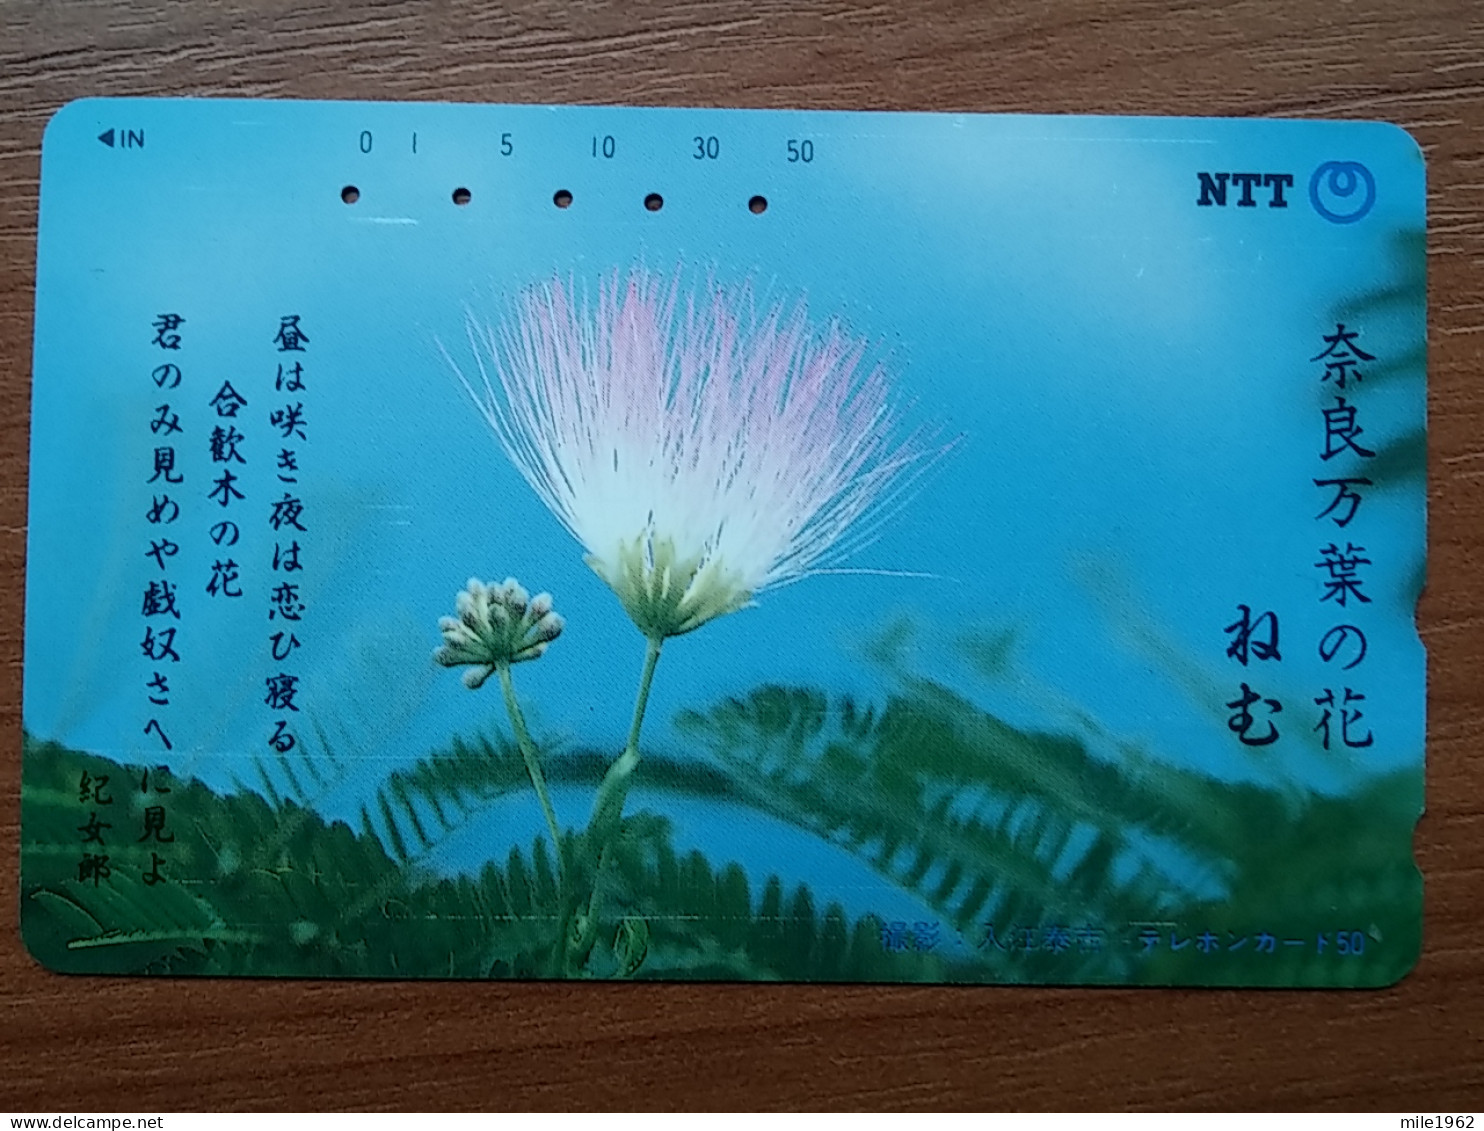 T-382 - JAPAN, Japon, Nipon, TELECARD, PHONECARD, Flower, Fleur, NTT 331-249 - Fleurs